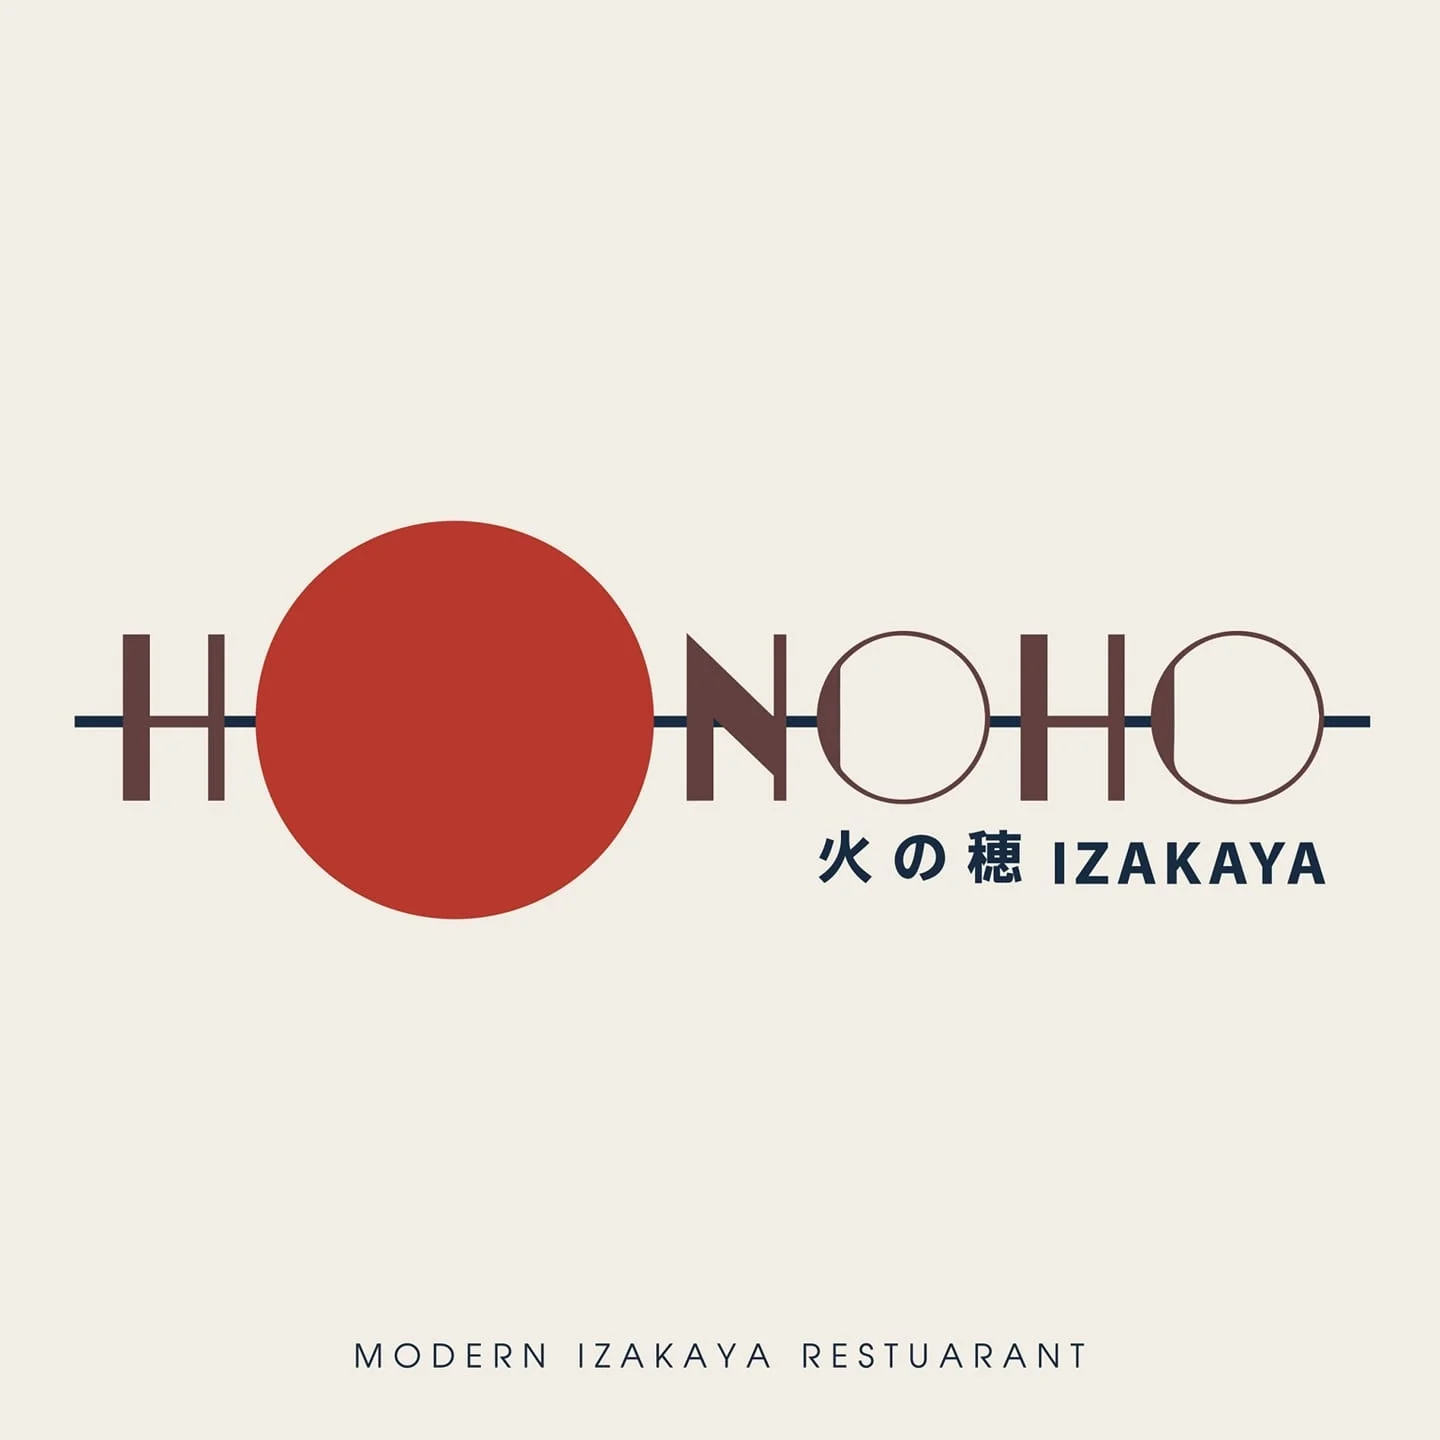 Honoho Izakaya